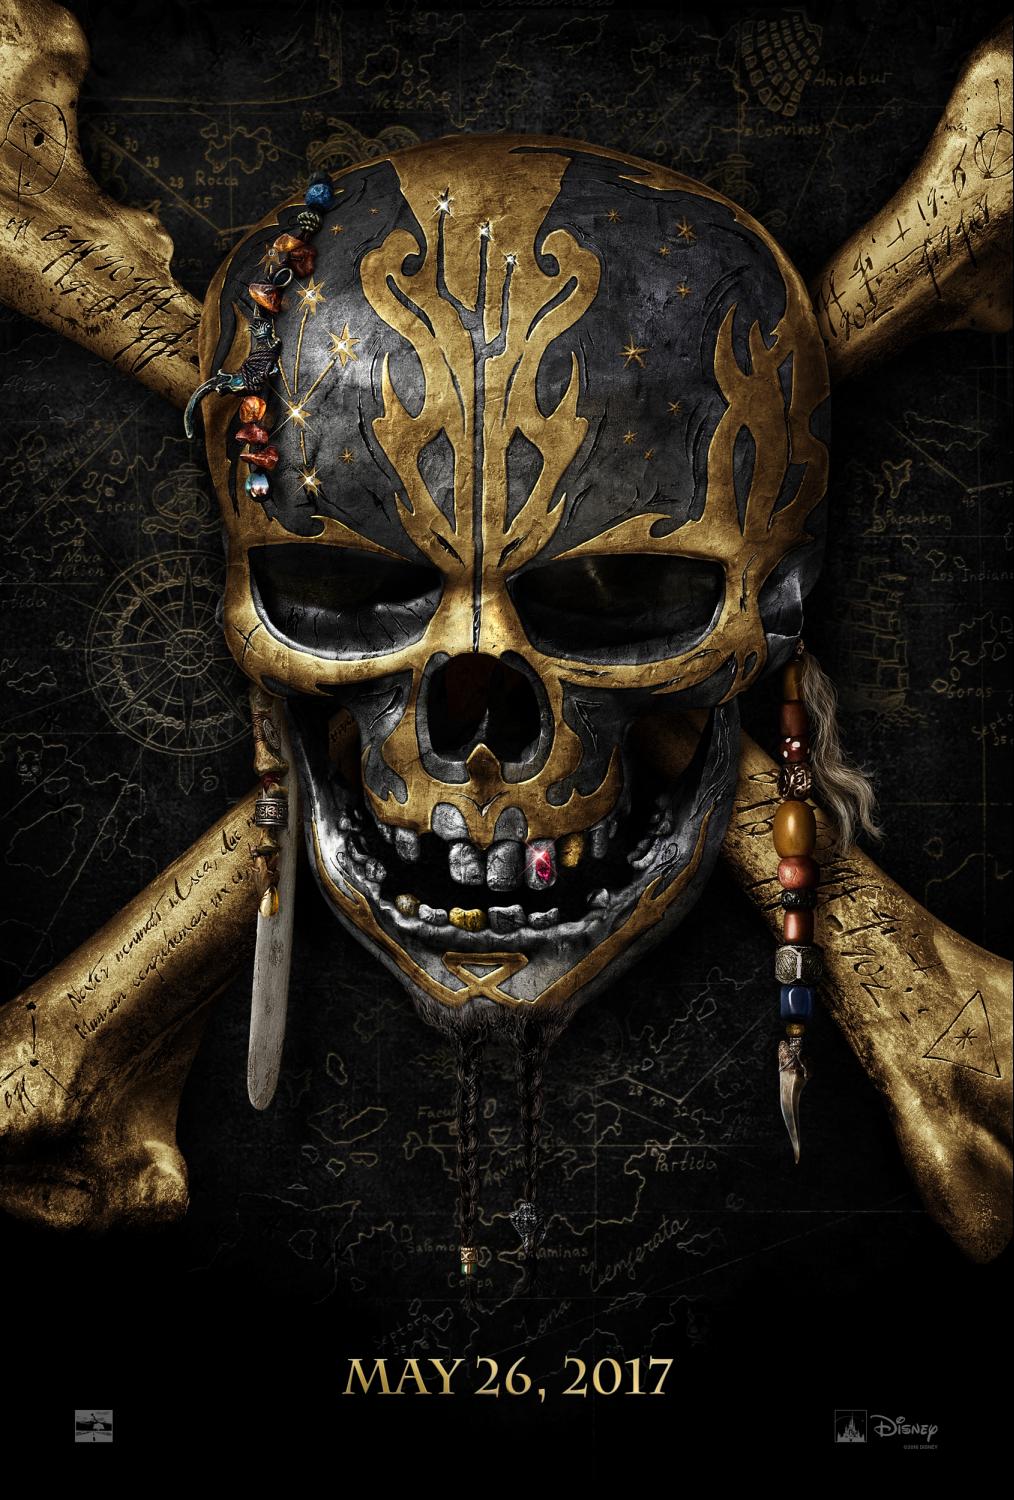 Disney’s Pirates of the Caribbean: Dead Men Tell No Tales